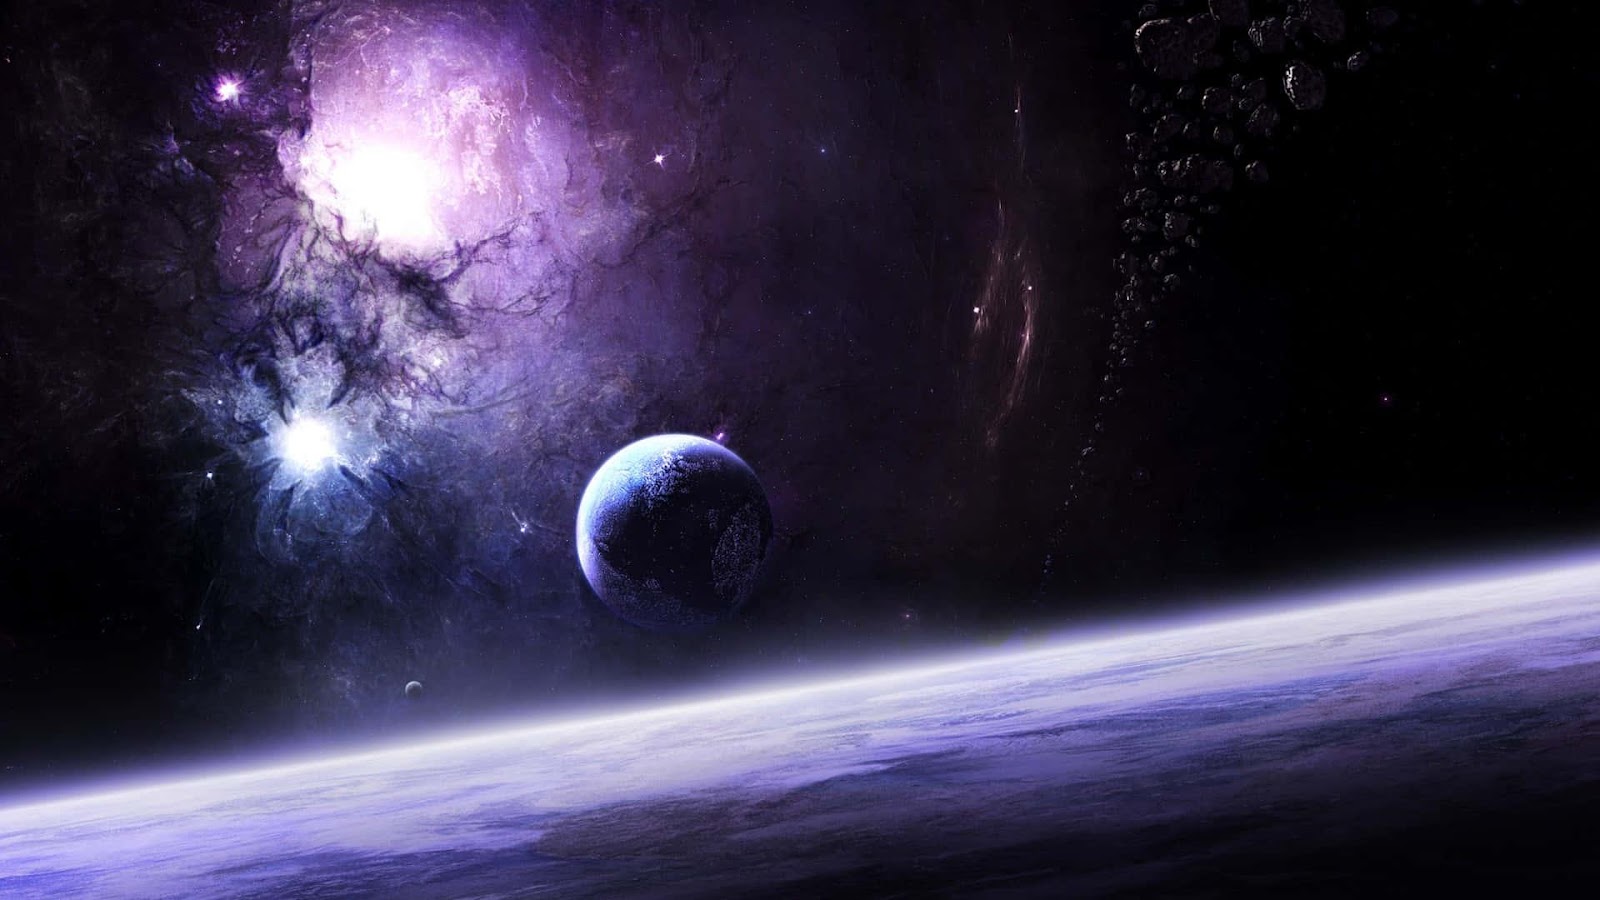 Download Galactic Exploration - Exploring the Wonders of the Universe  Wallpaper | Wallpapers.com